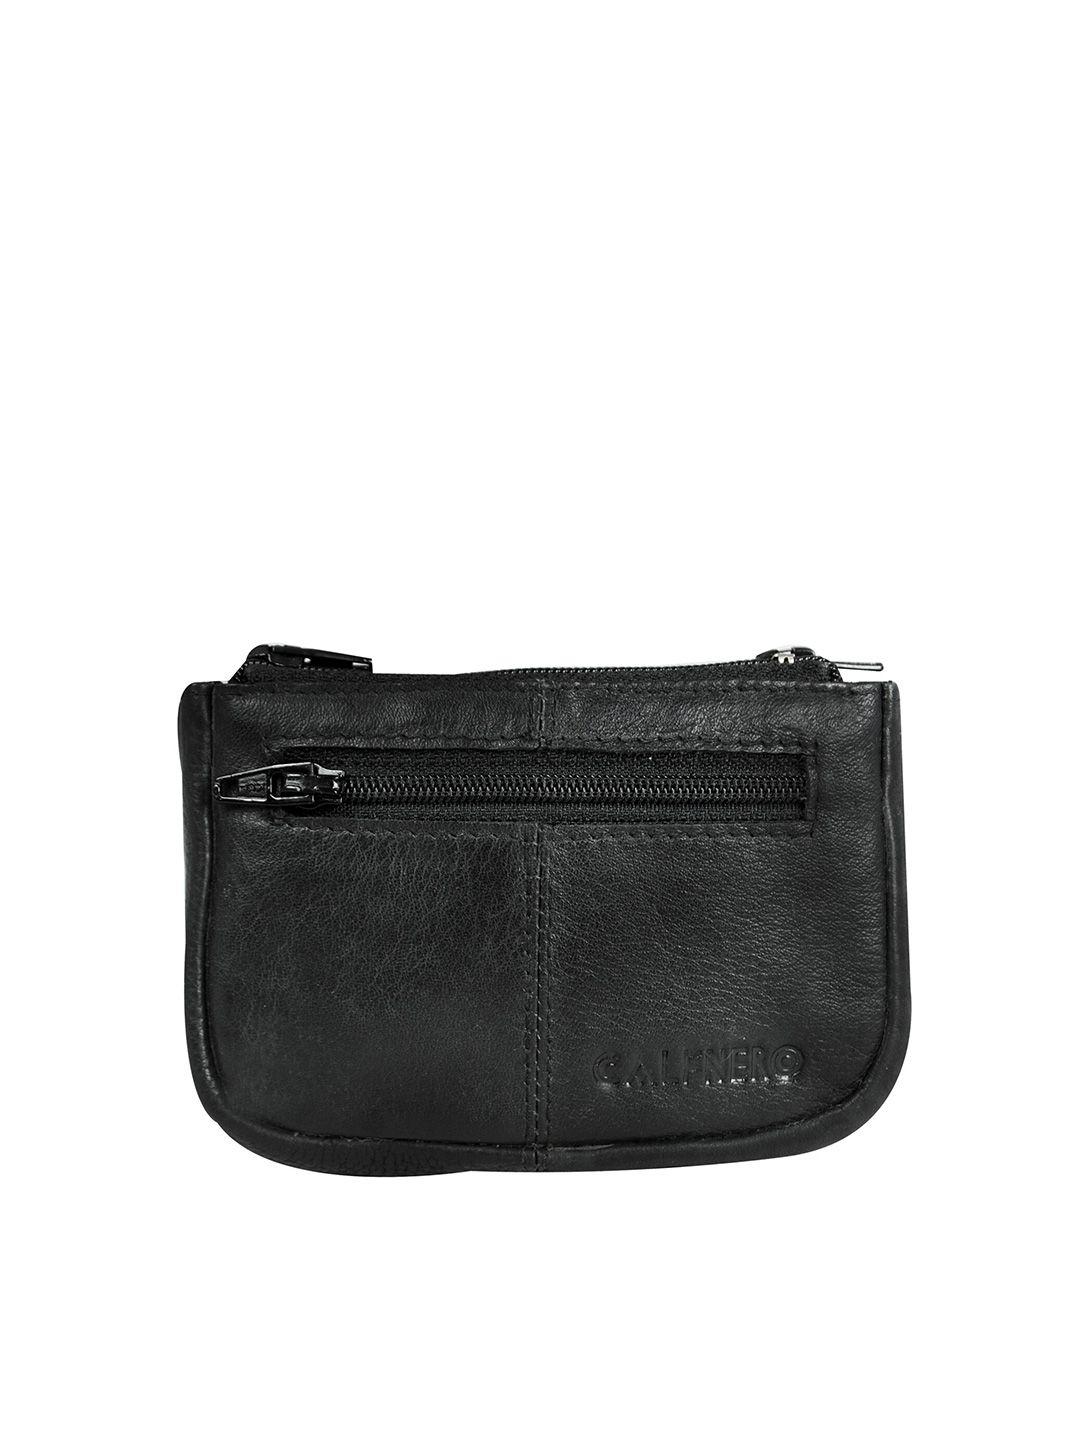 calfnero unisex leather zip around wallet